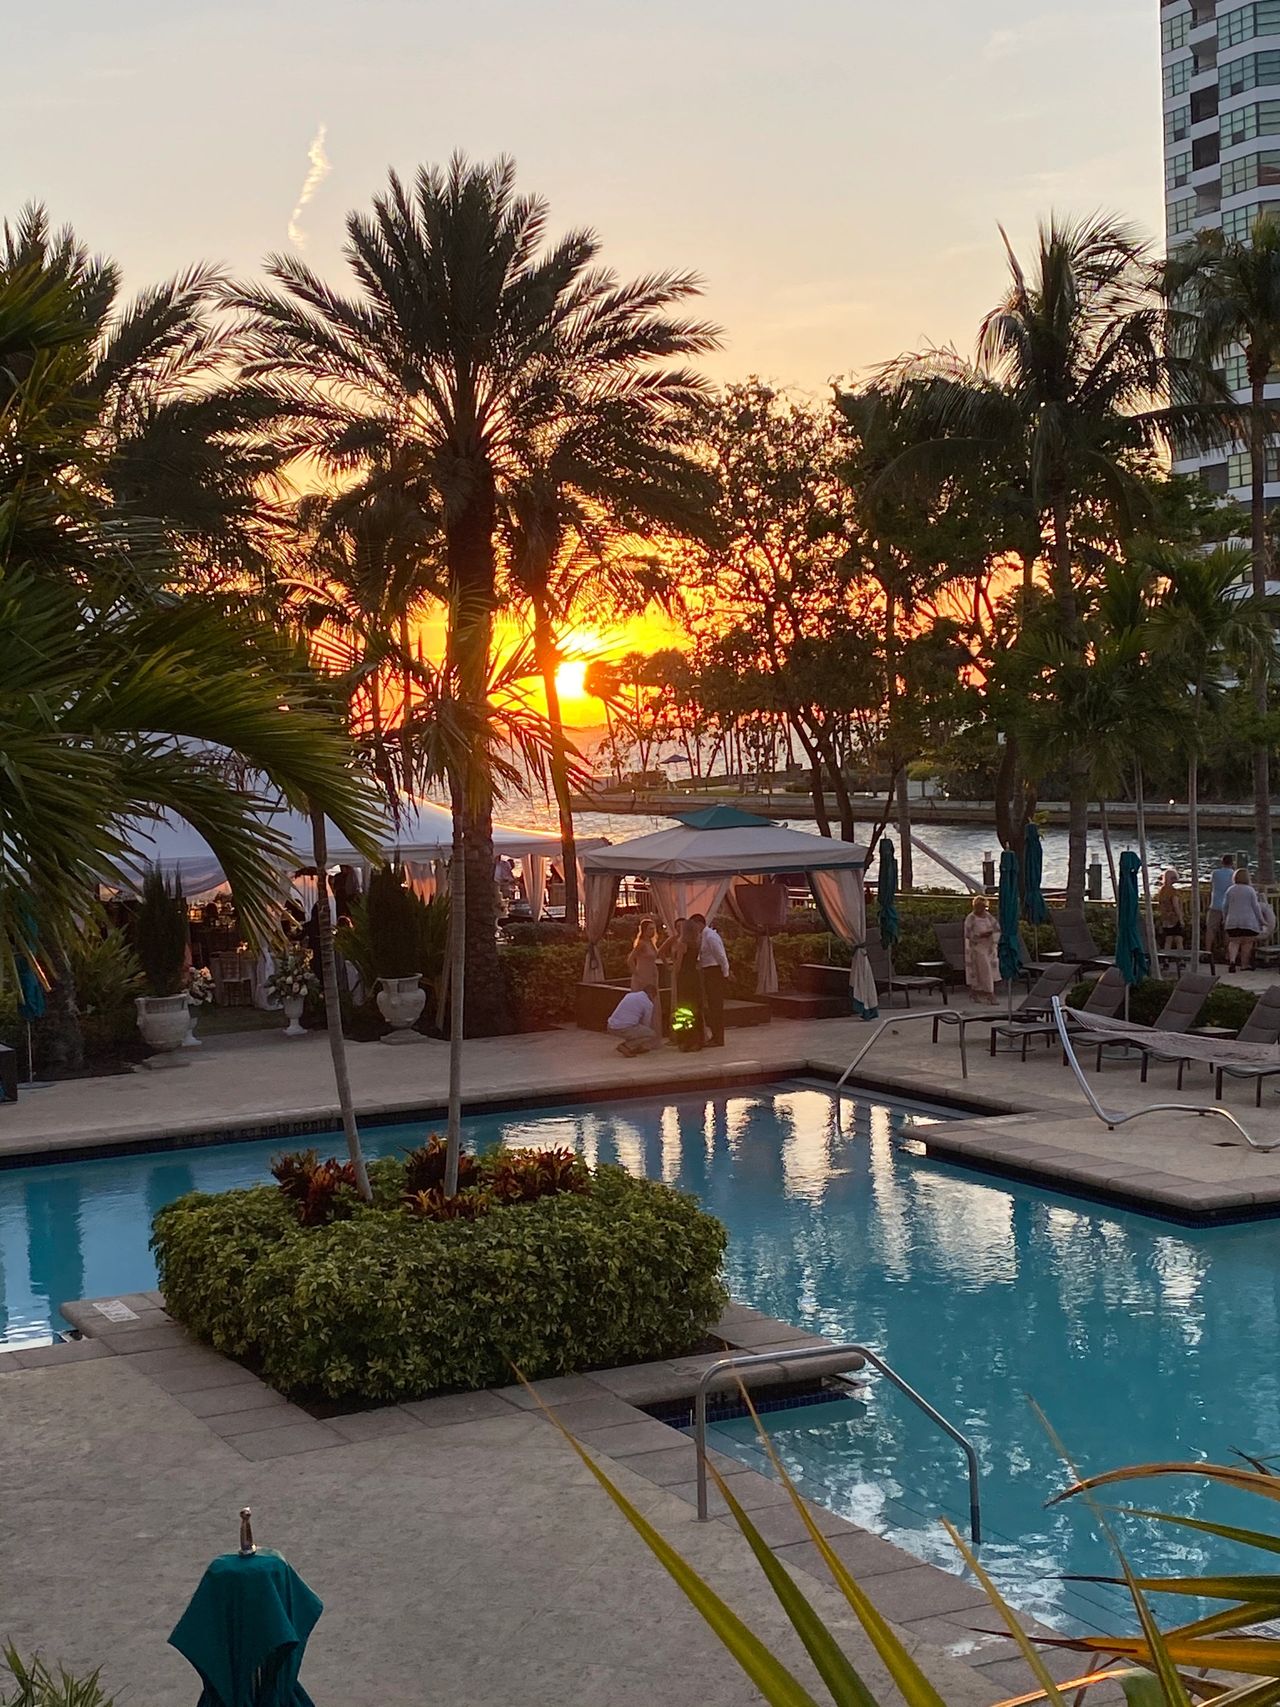 10 Florida summer destinations for a relaxing getaway